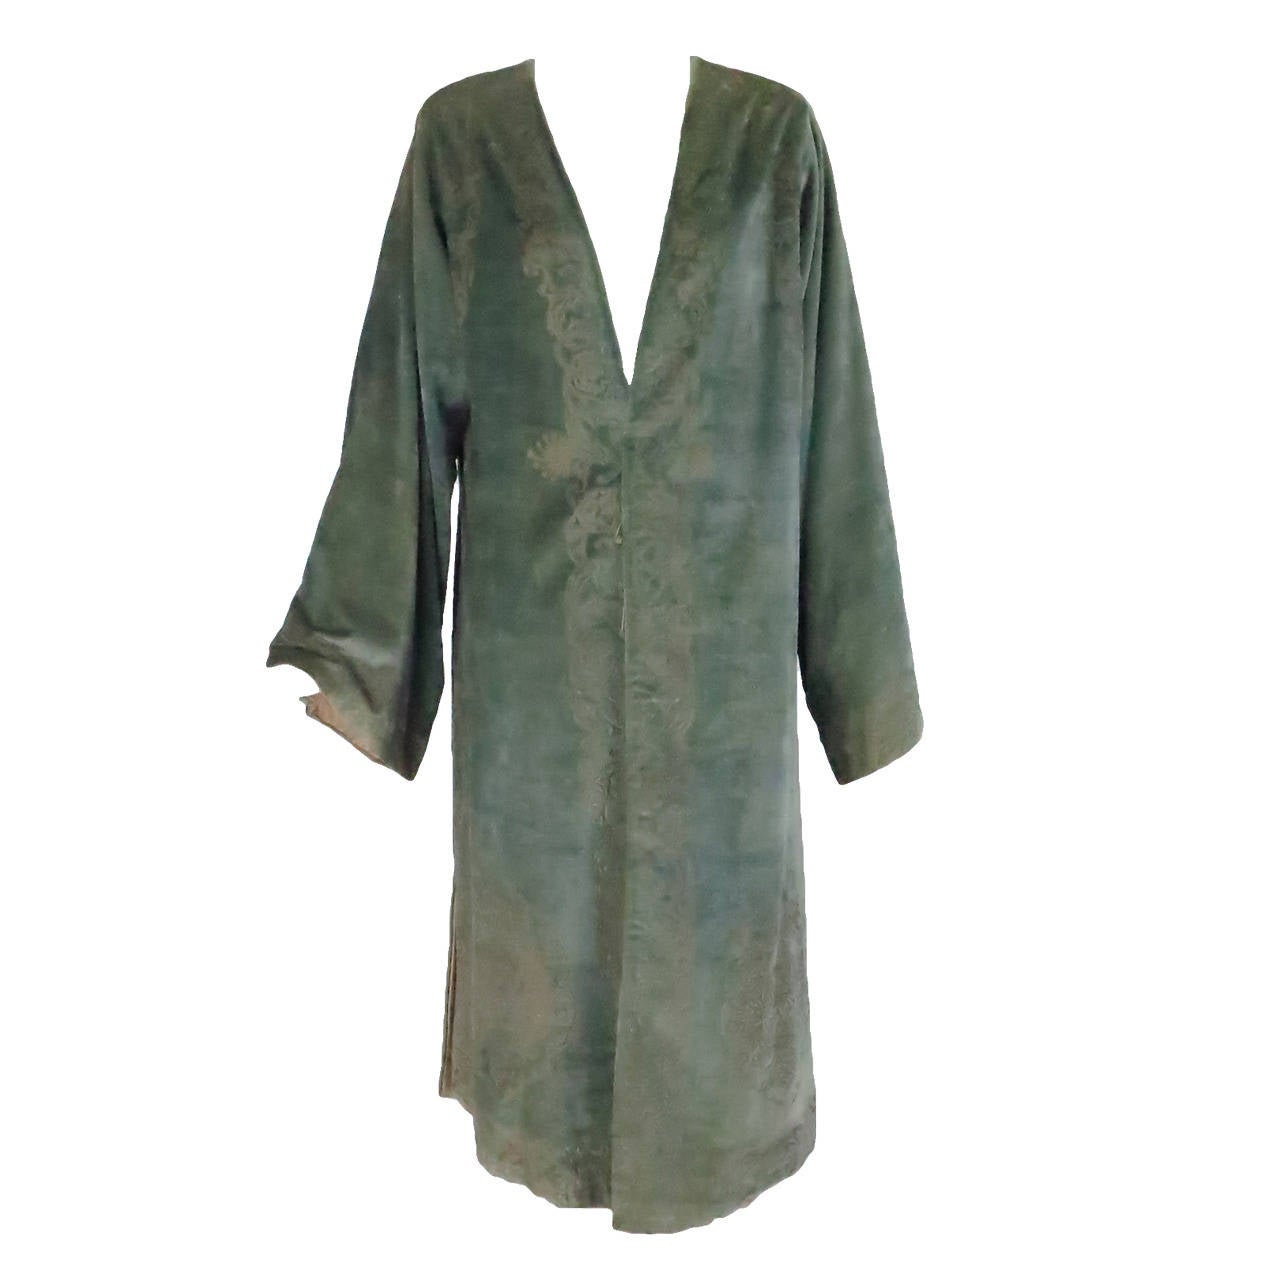 Mariano Fortuny sea green stenciled silk velvet coat early 1900s ...